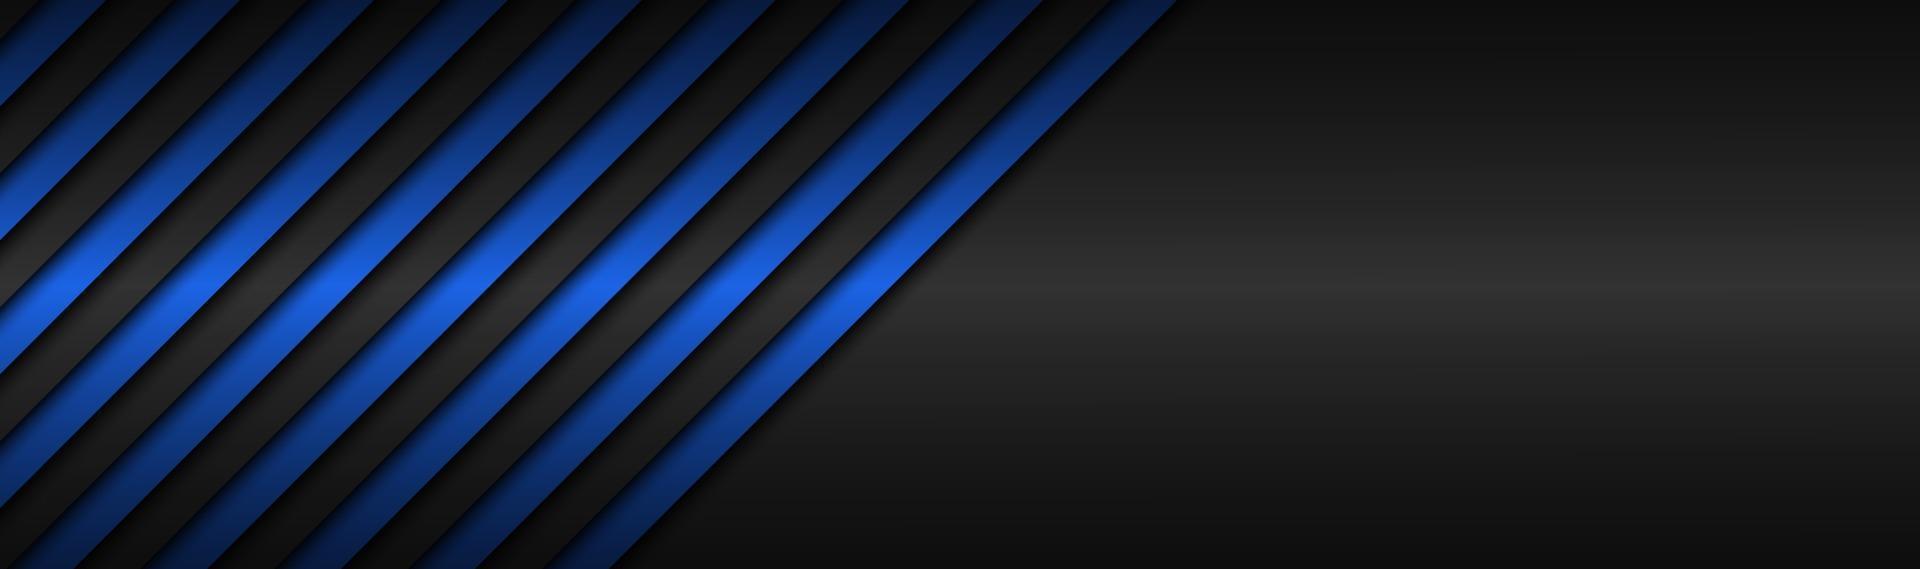 encabezado de vector metálico abstracto azul oscuro con líneas inclinadas patrón de rayas azules líneas paralelas y tiras fondo de pantalla panorámica abstracta de vector con espacio en blanco para su logotipo